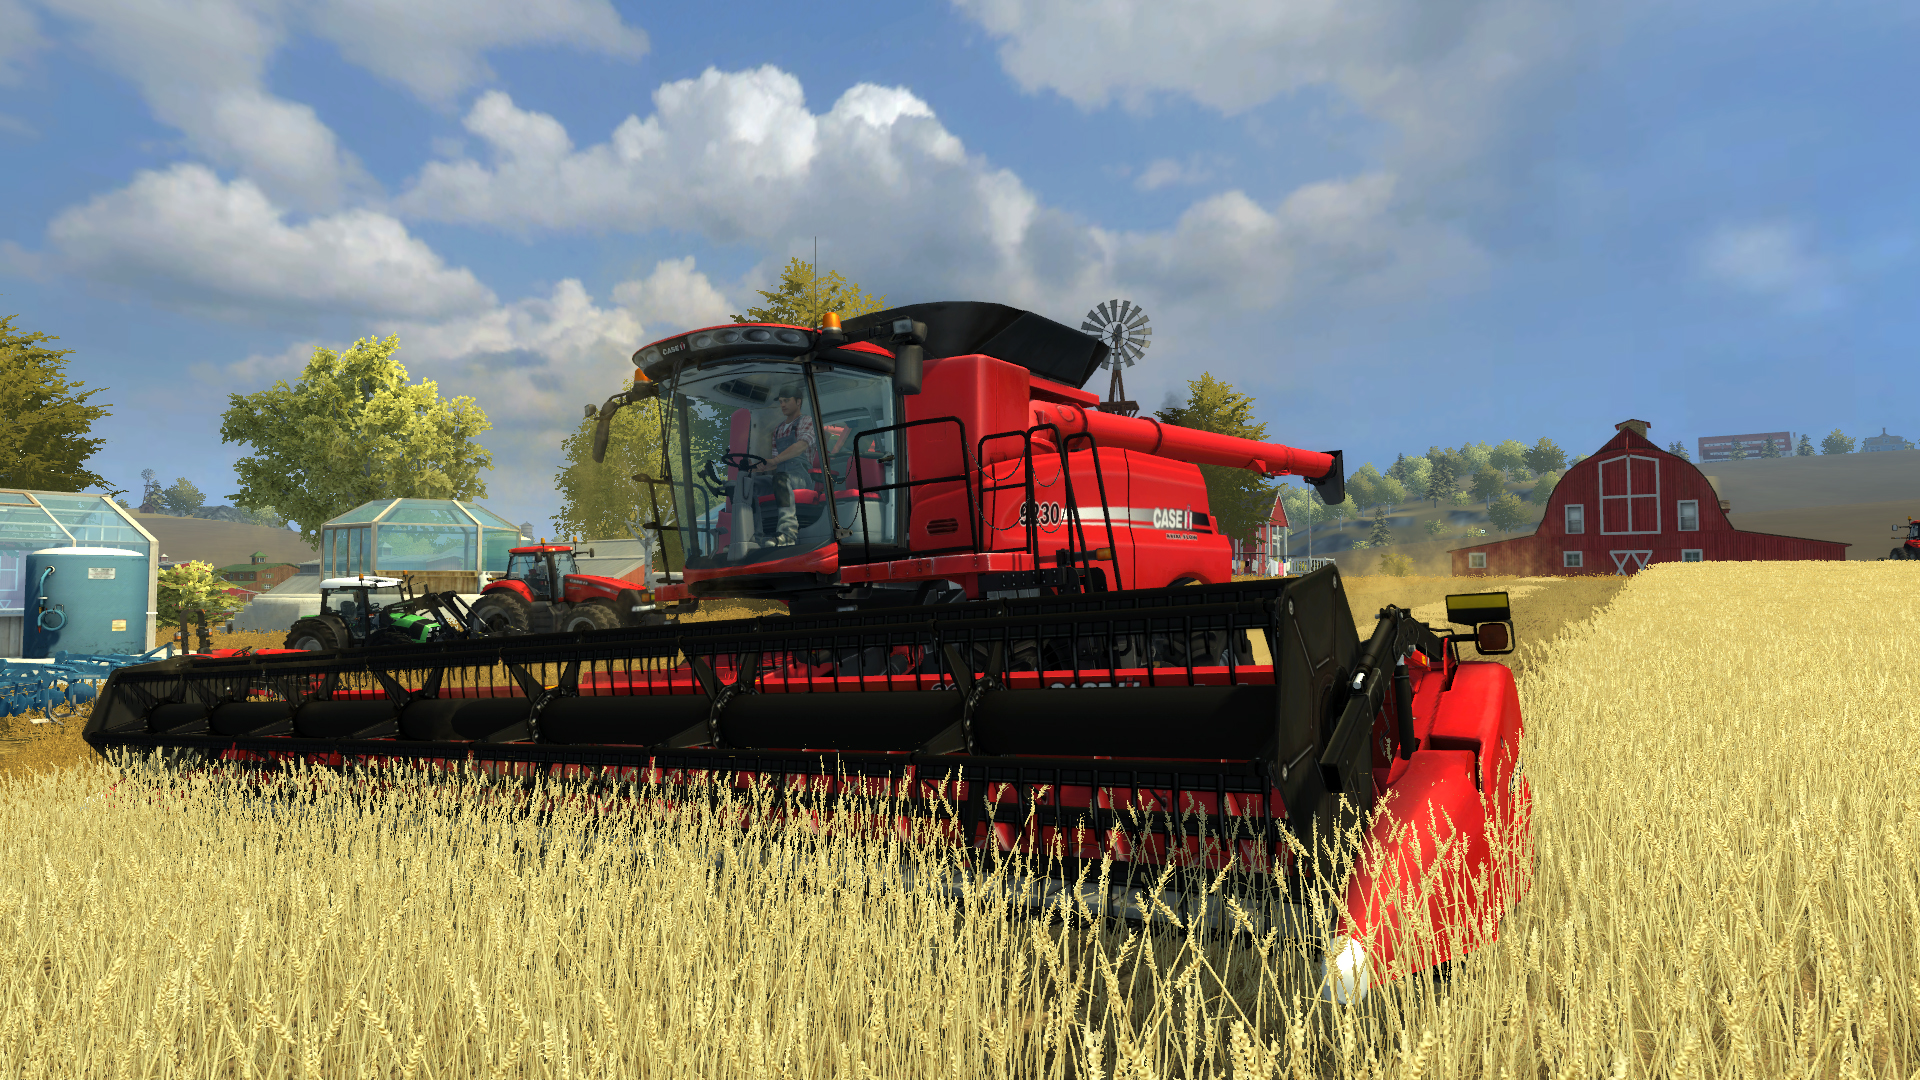 download farming simulator 2013 for free